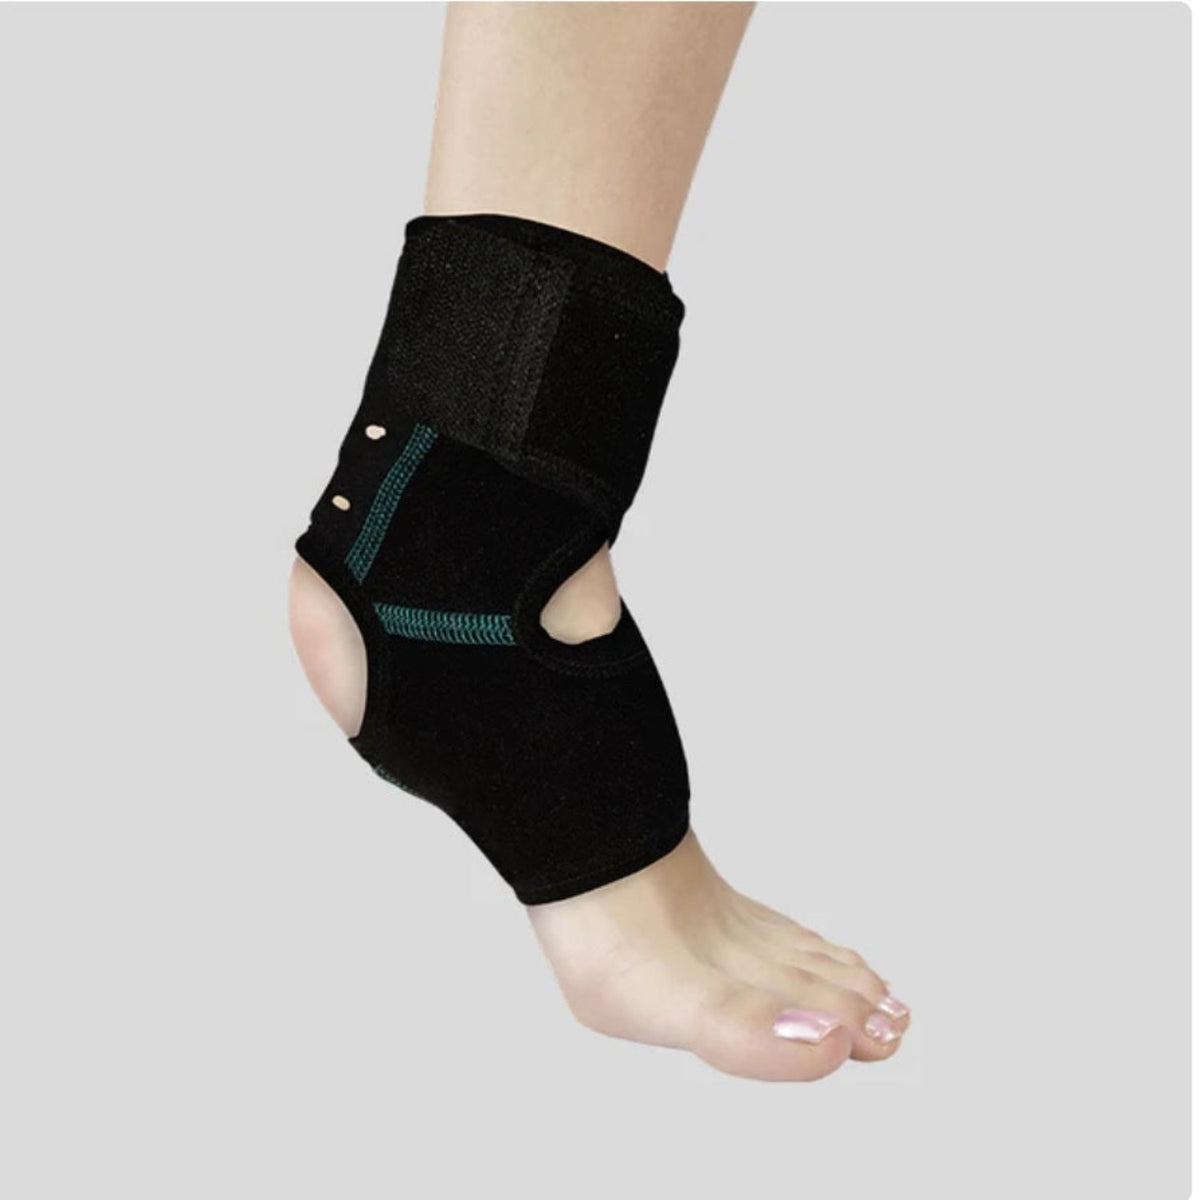 Flamingo Health Orthopaedic Ankle Wrap Code 2371